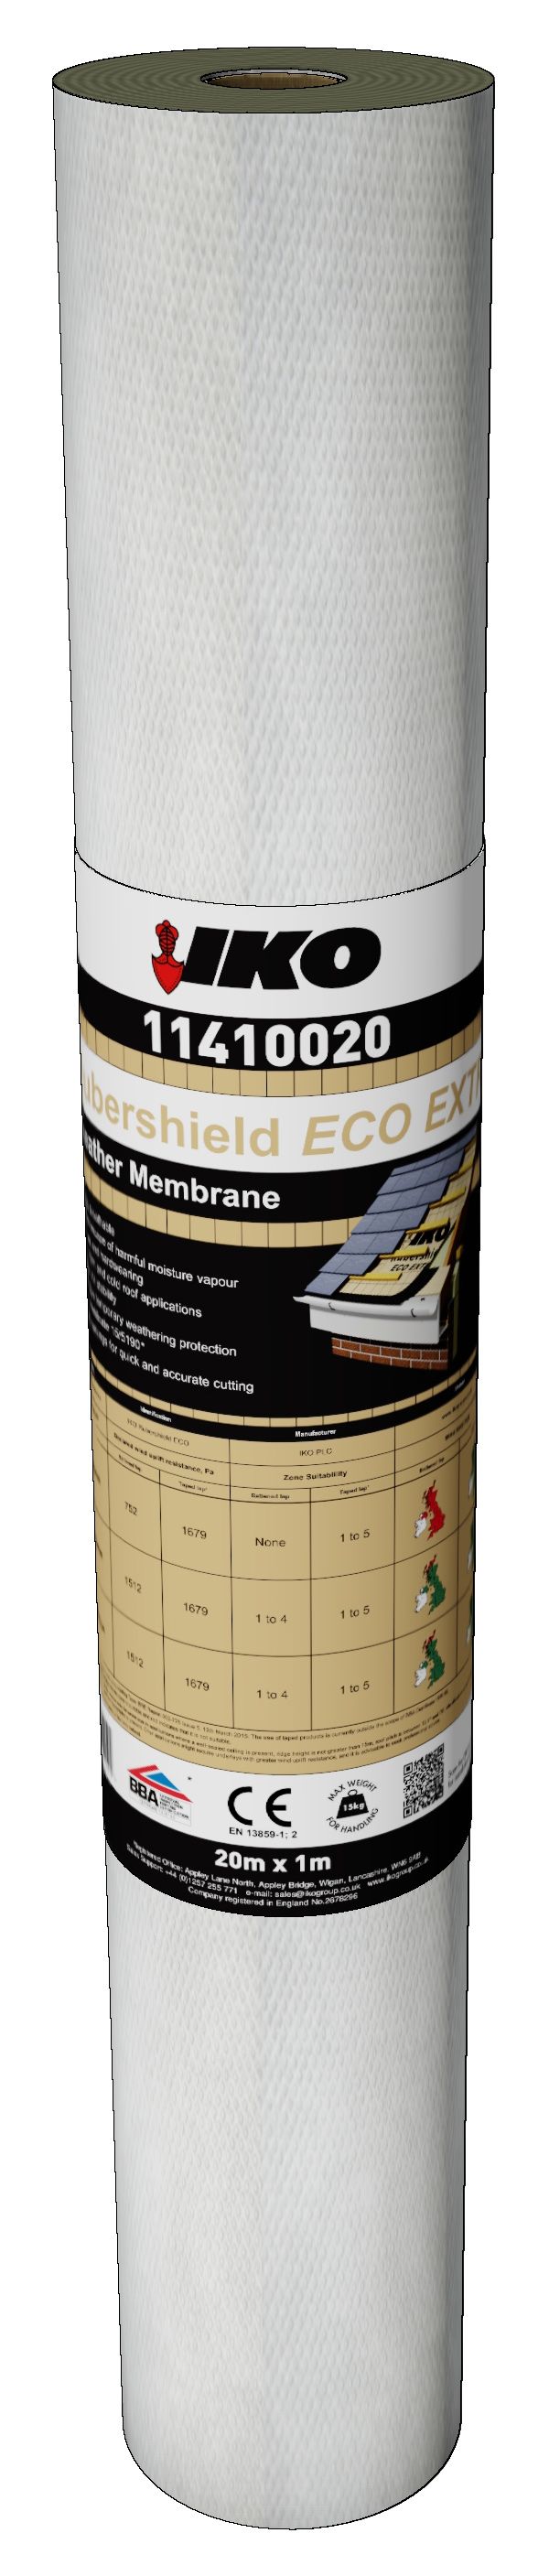 IKO Rubershield Eco Extra 120g/sqm Breather Membrane - 20 x 1m